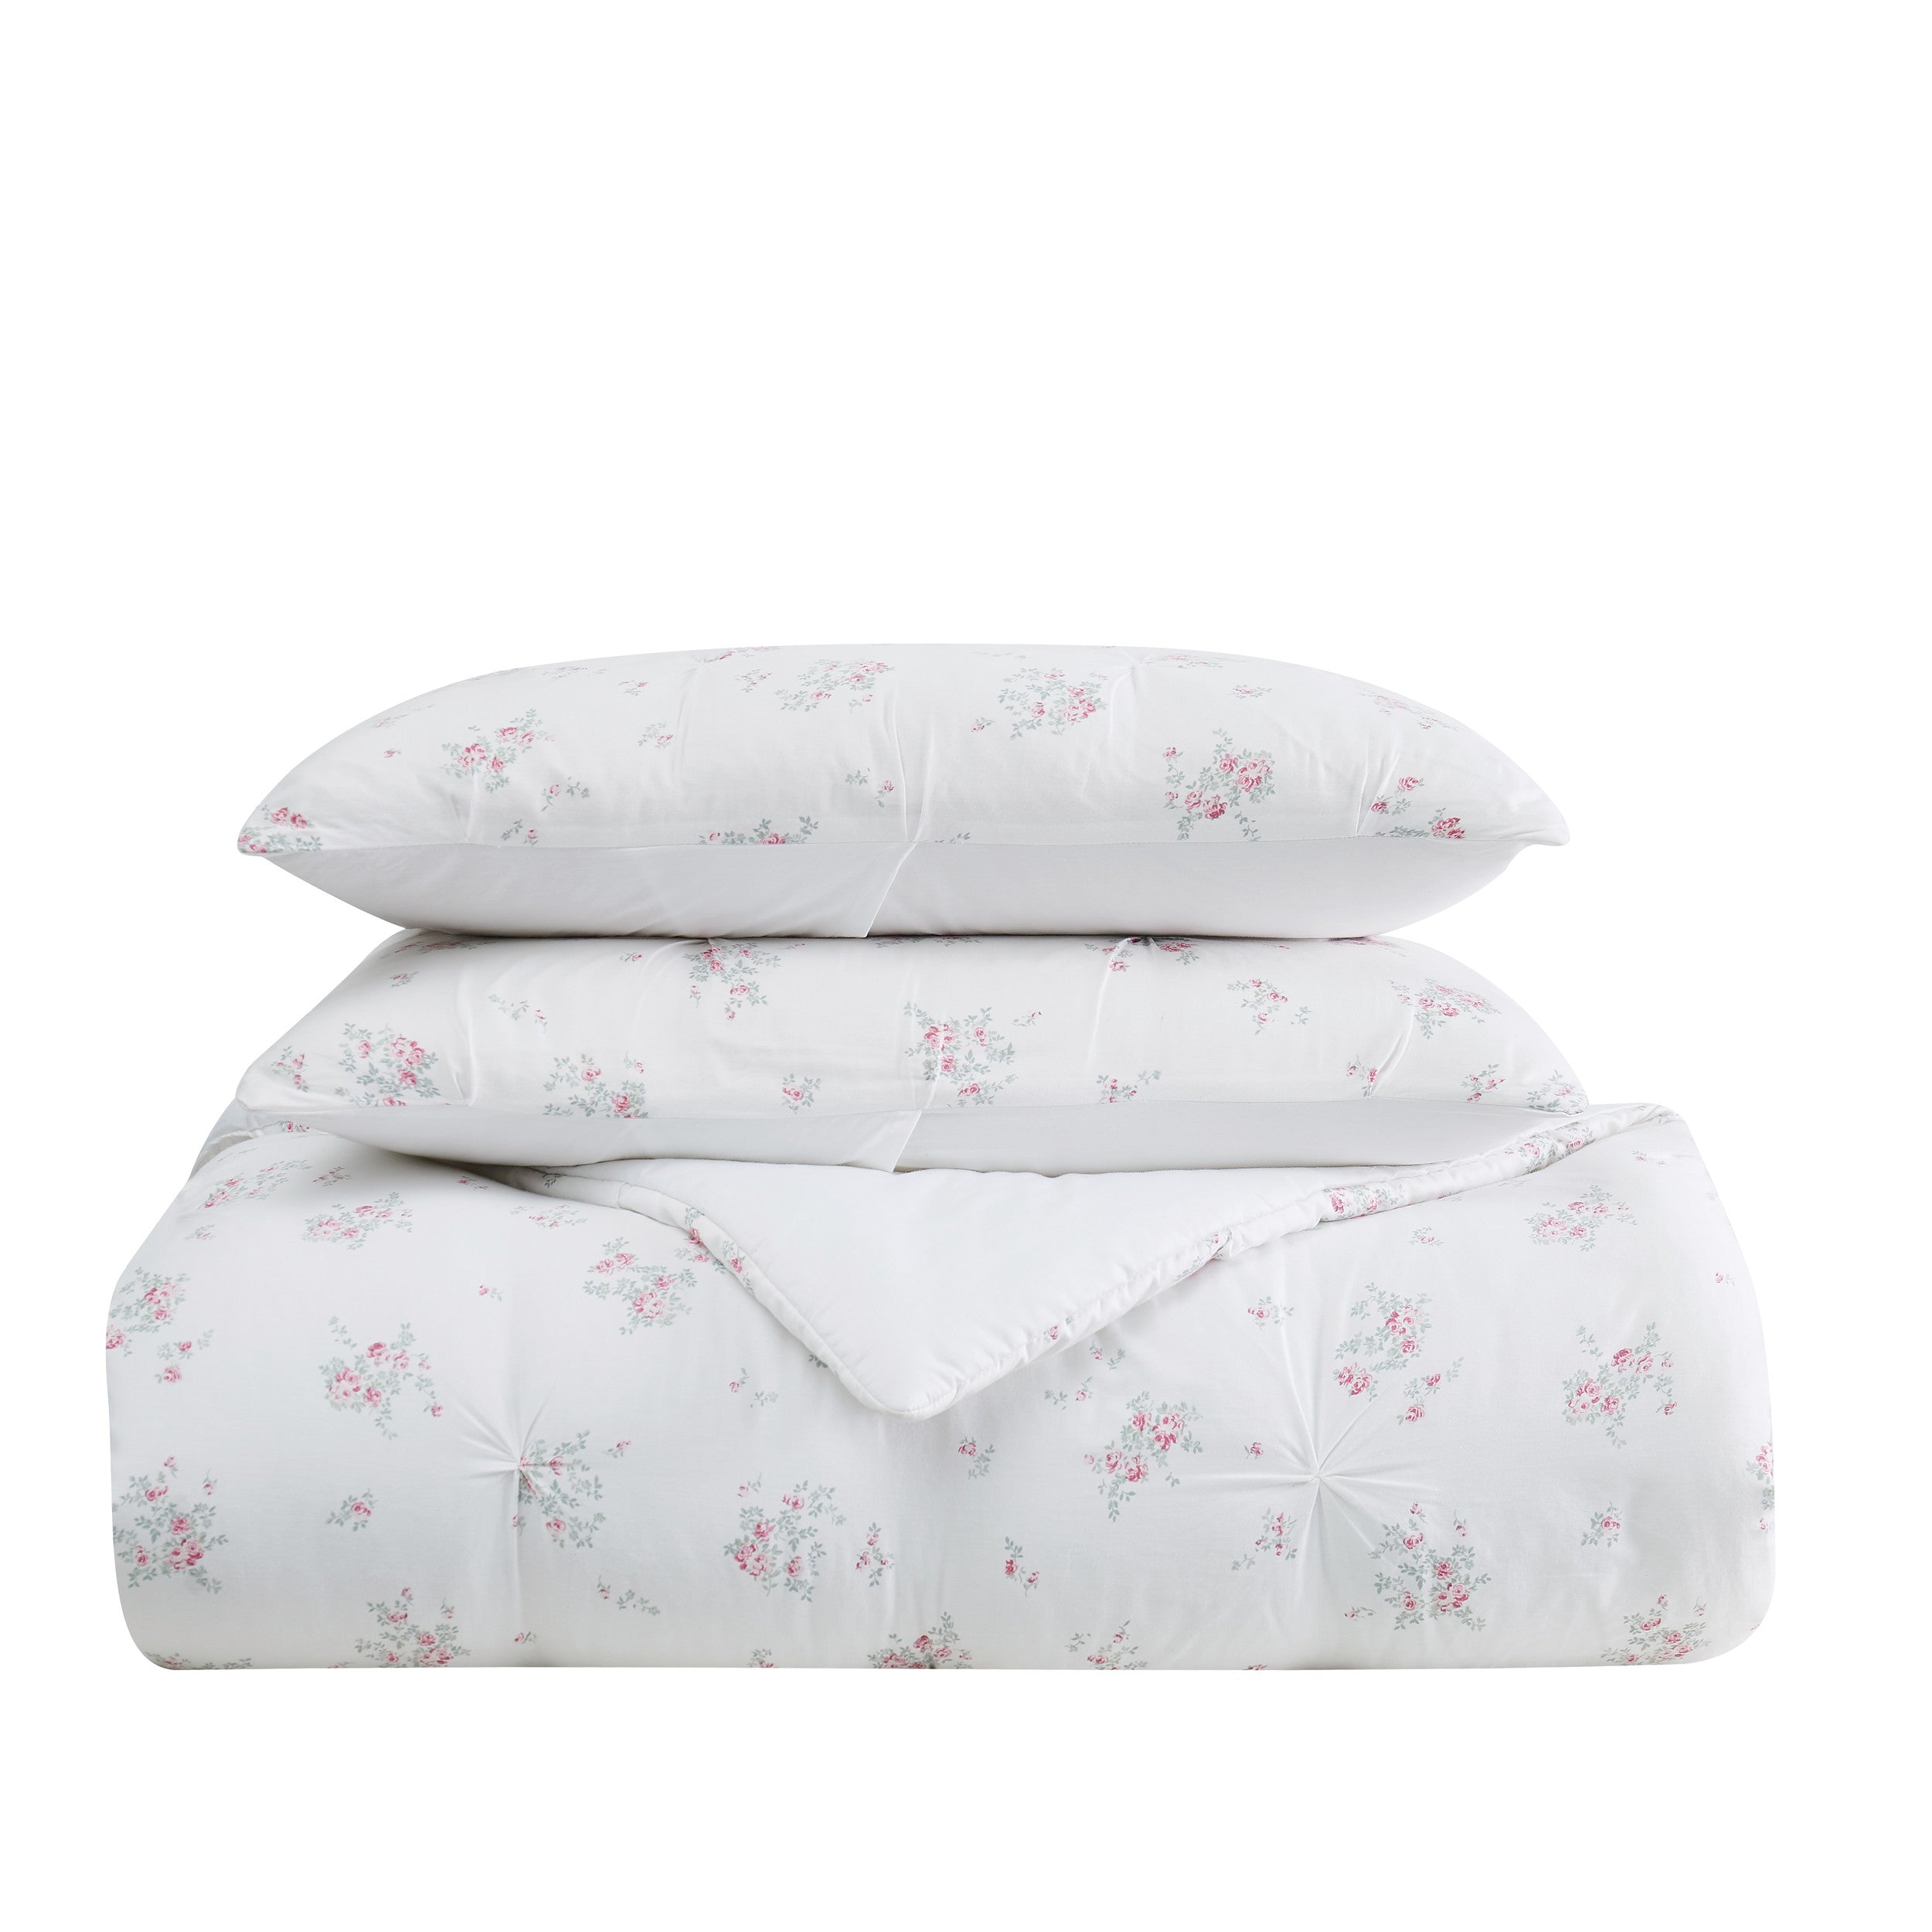 Vintage Floral Comforter Set  Floral King Size Bedding – Rachel Ashwell  Shabby Chic Couture